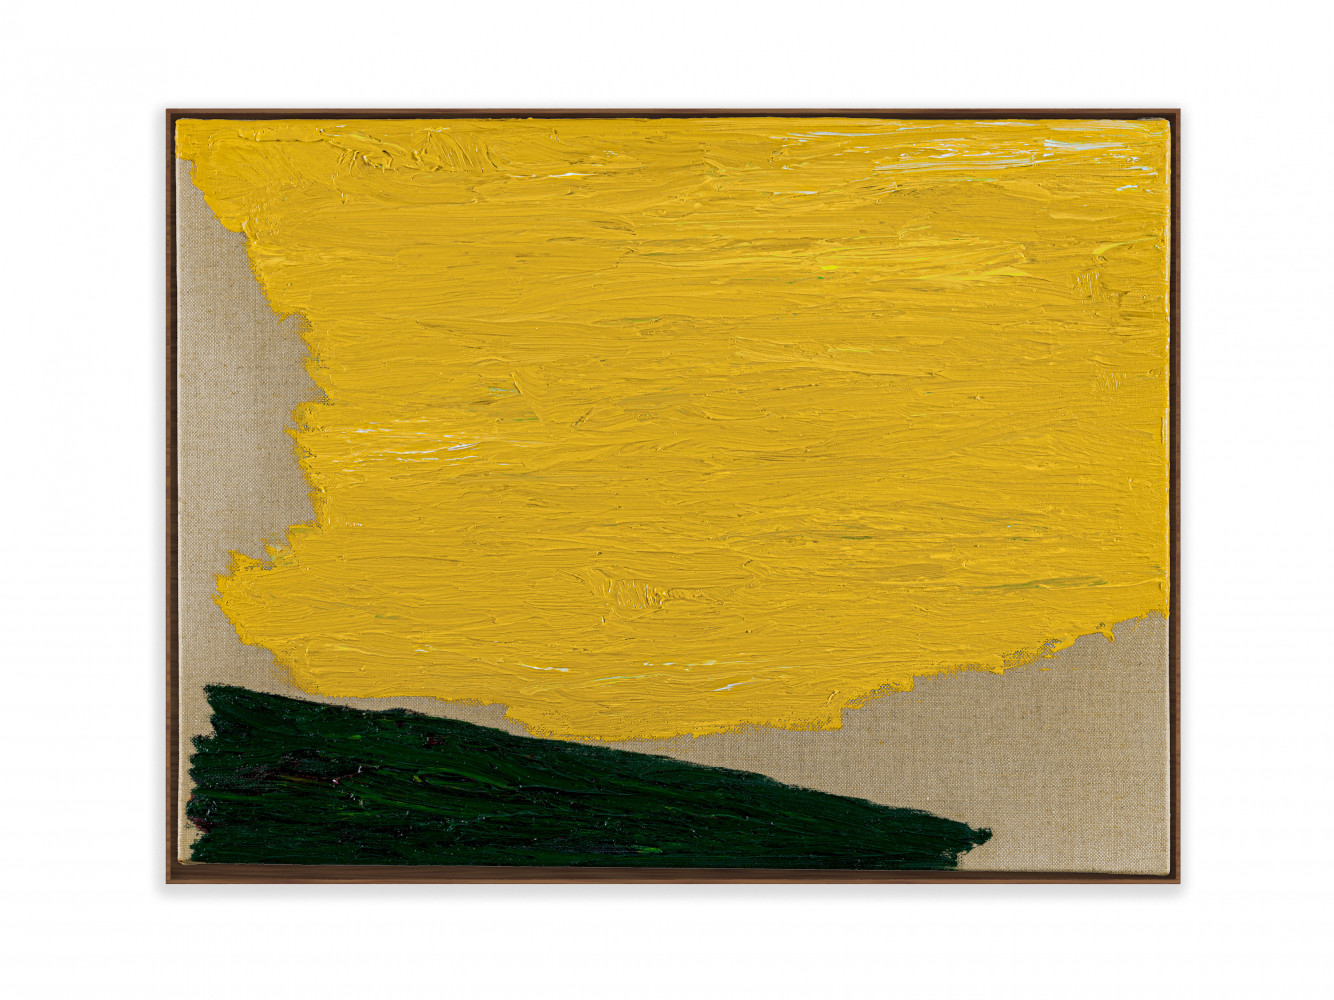 Pedro Cabrita Reis, ‘Landscapes (series XI) #15’, 2020, Oil on raw canvas